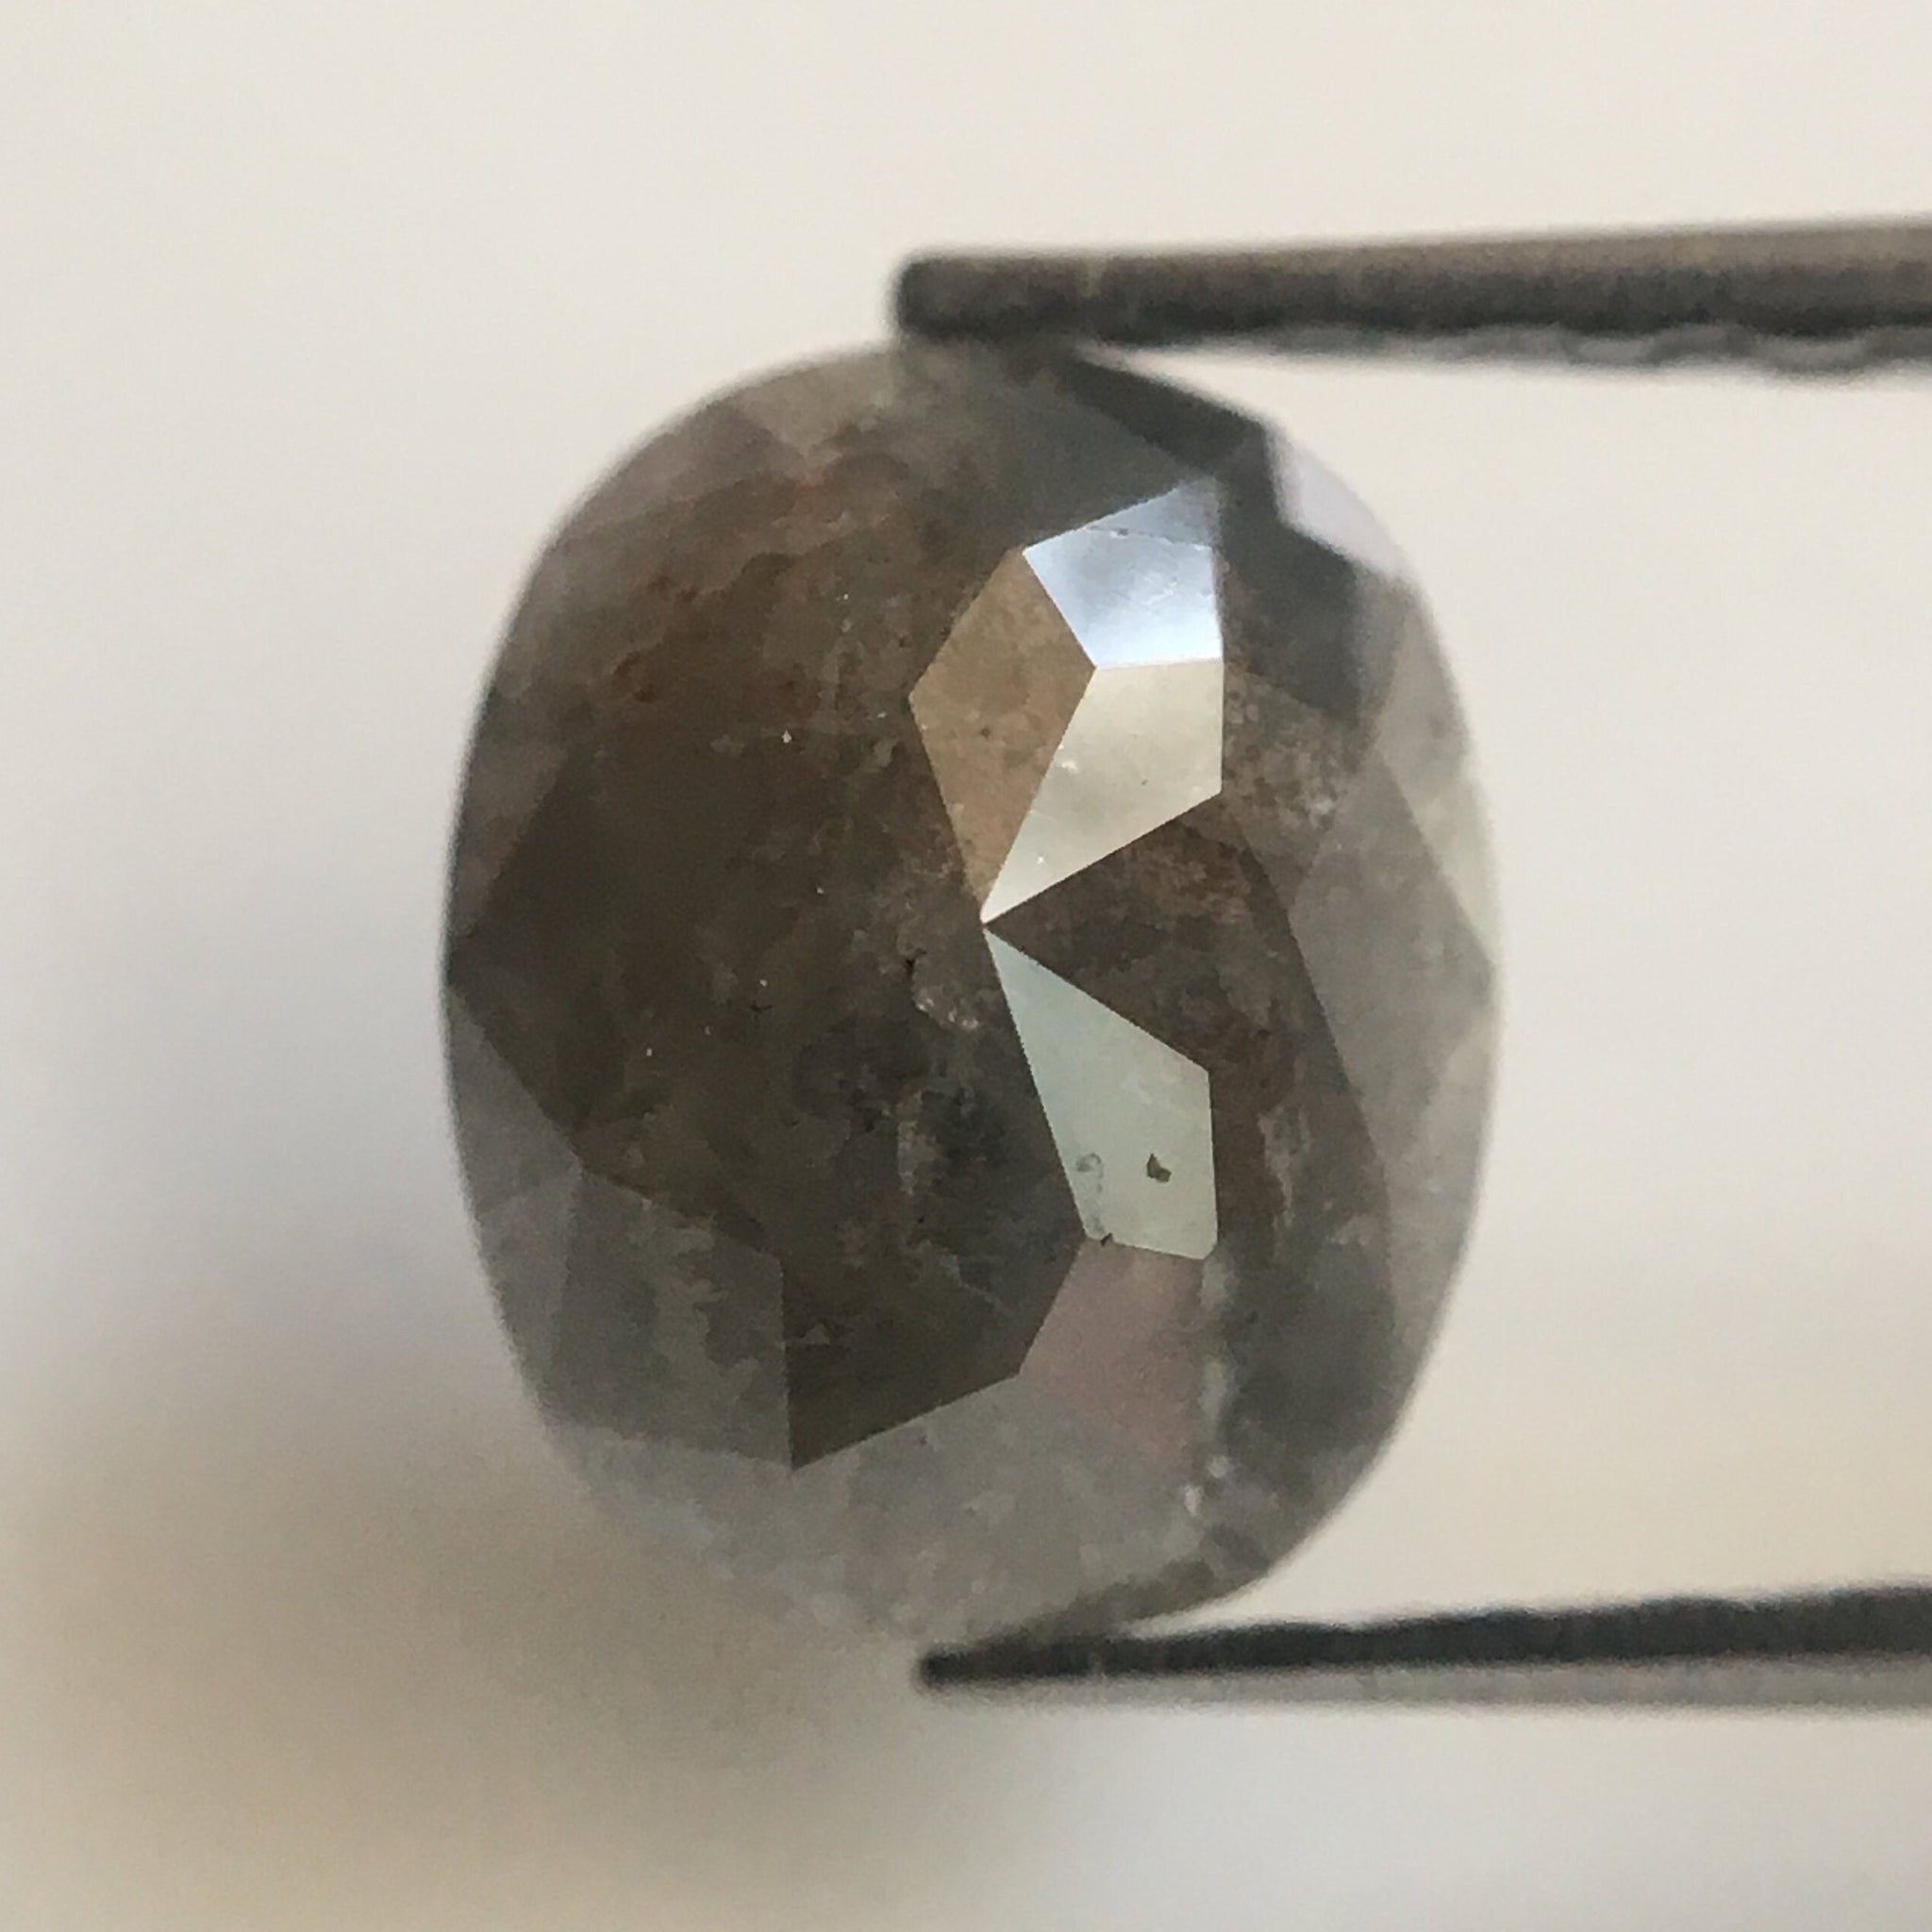 0.99 Ct Natural Dark Gray Oval Shape Rose cut Diamond, 7.39 mm X 5.97 mm X 2.70 mm Beautiful sparkling Natural Loose Diamond AJ02/24